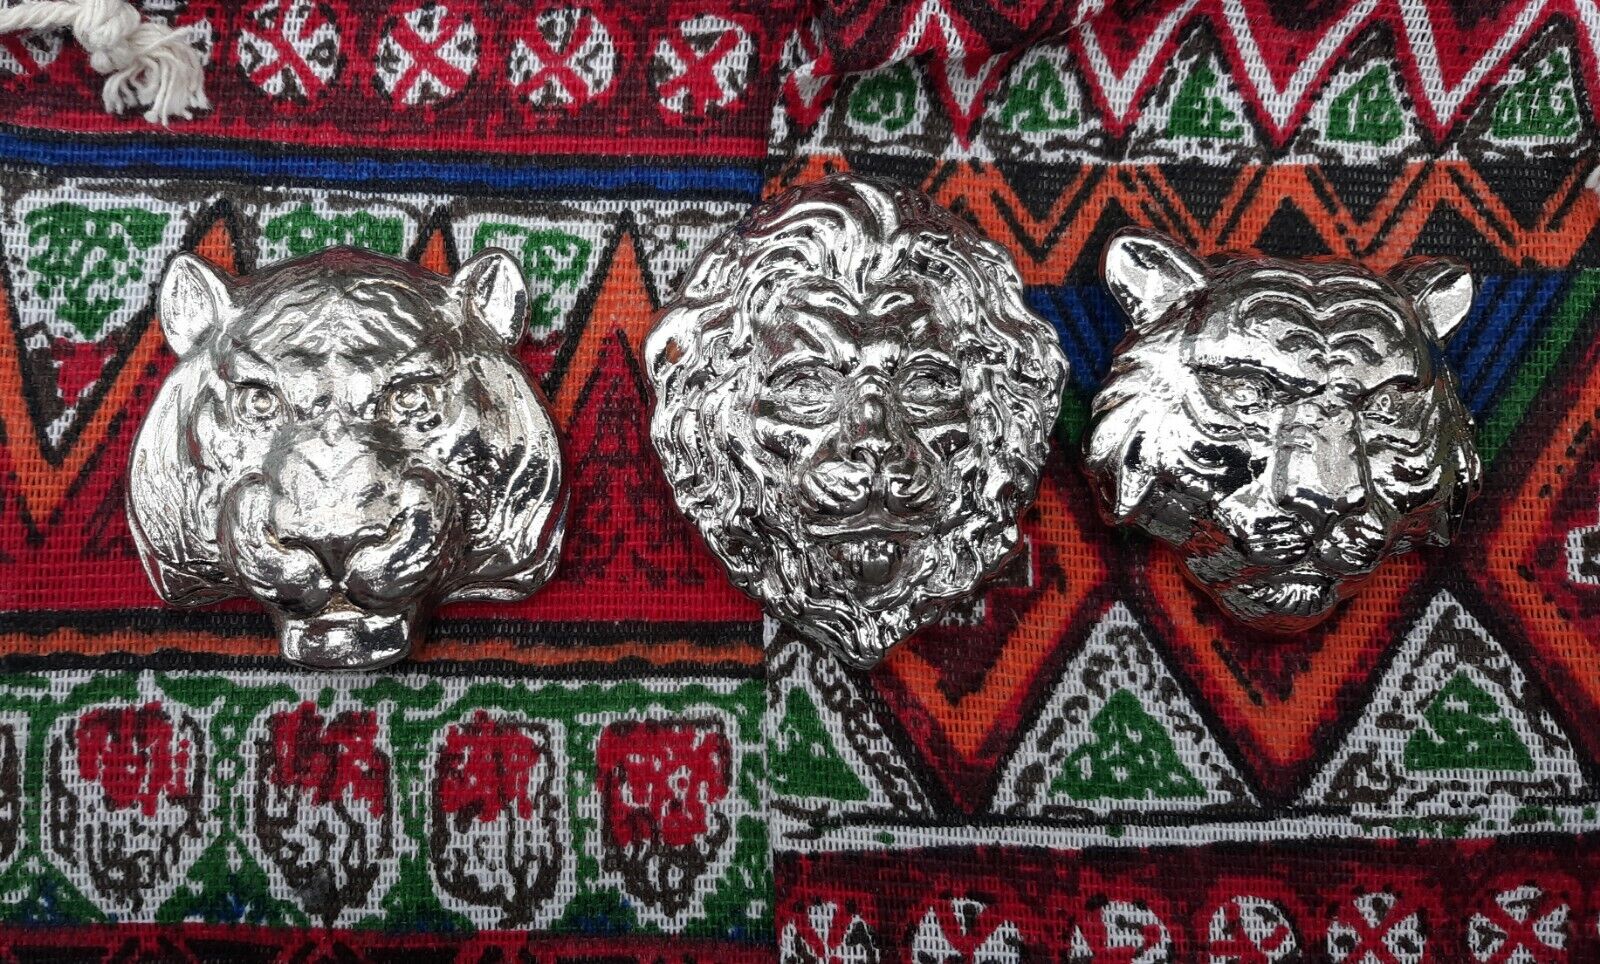 15 oz. Hand Poured 999 Bismuth Art Bullion Feline Trio - Lion, Bengal, Tiger